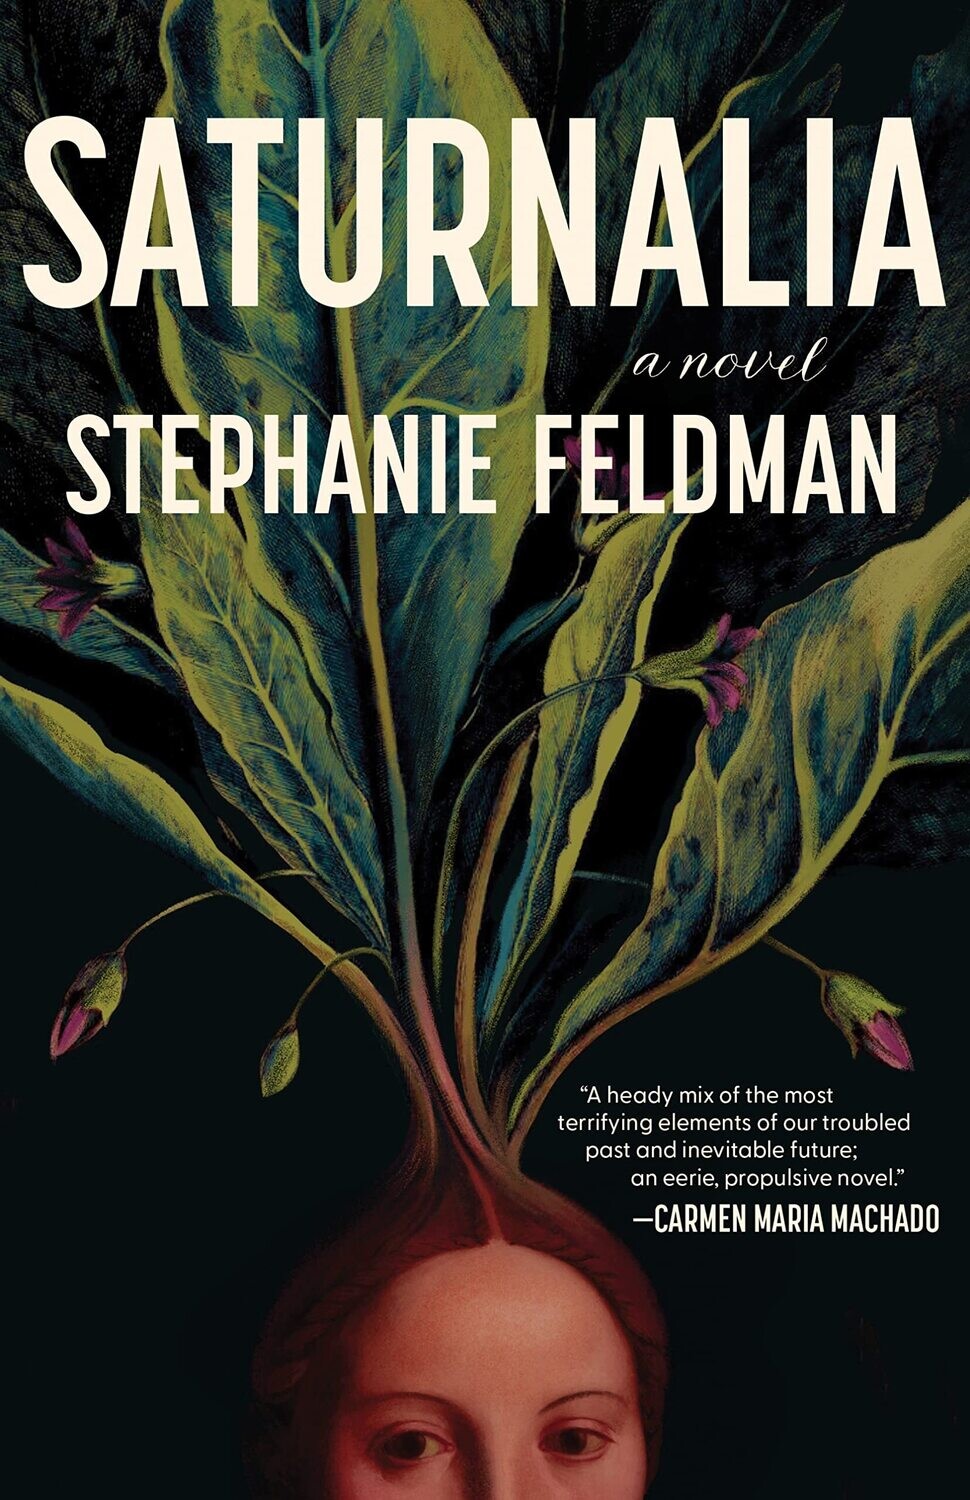 Saturnalia: A Novel by Stephanie Feldman